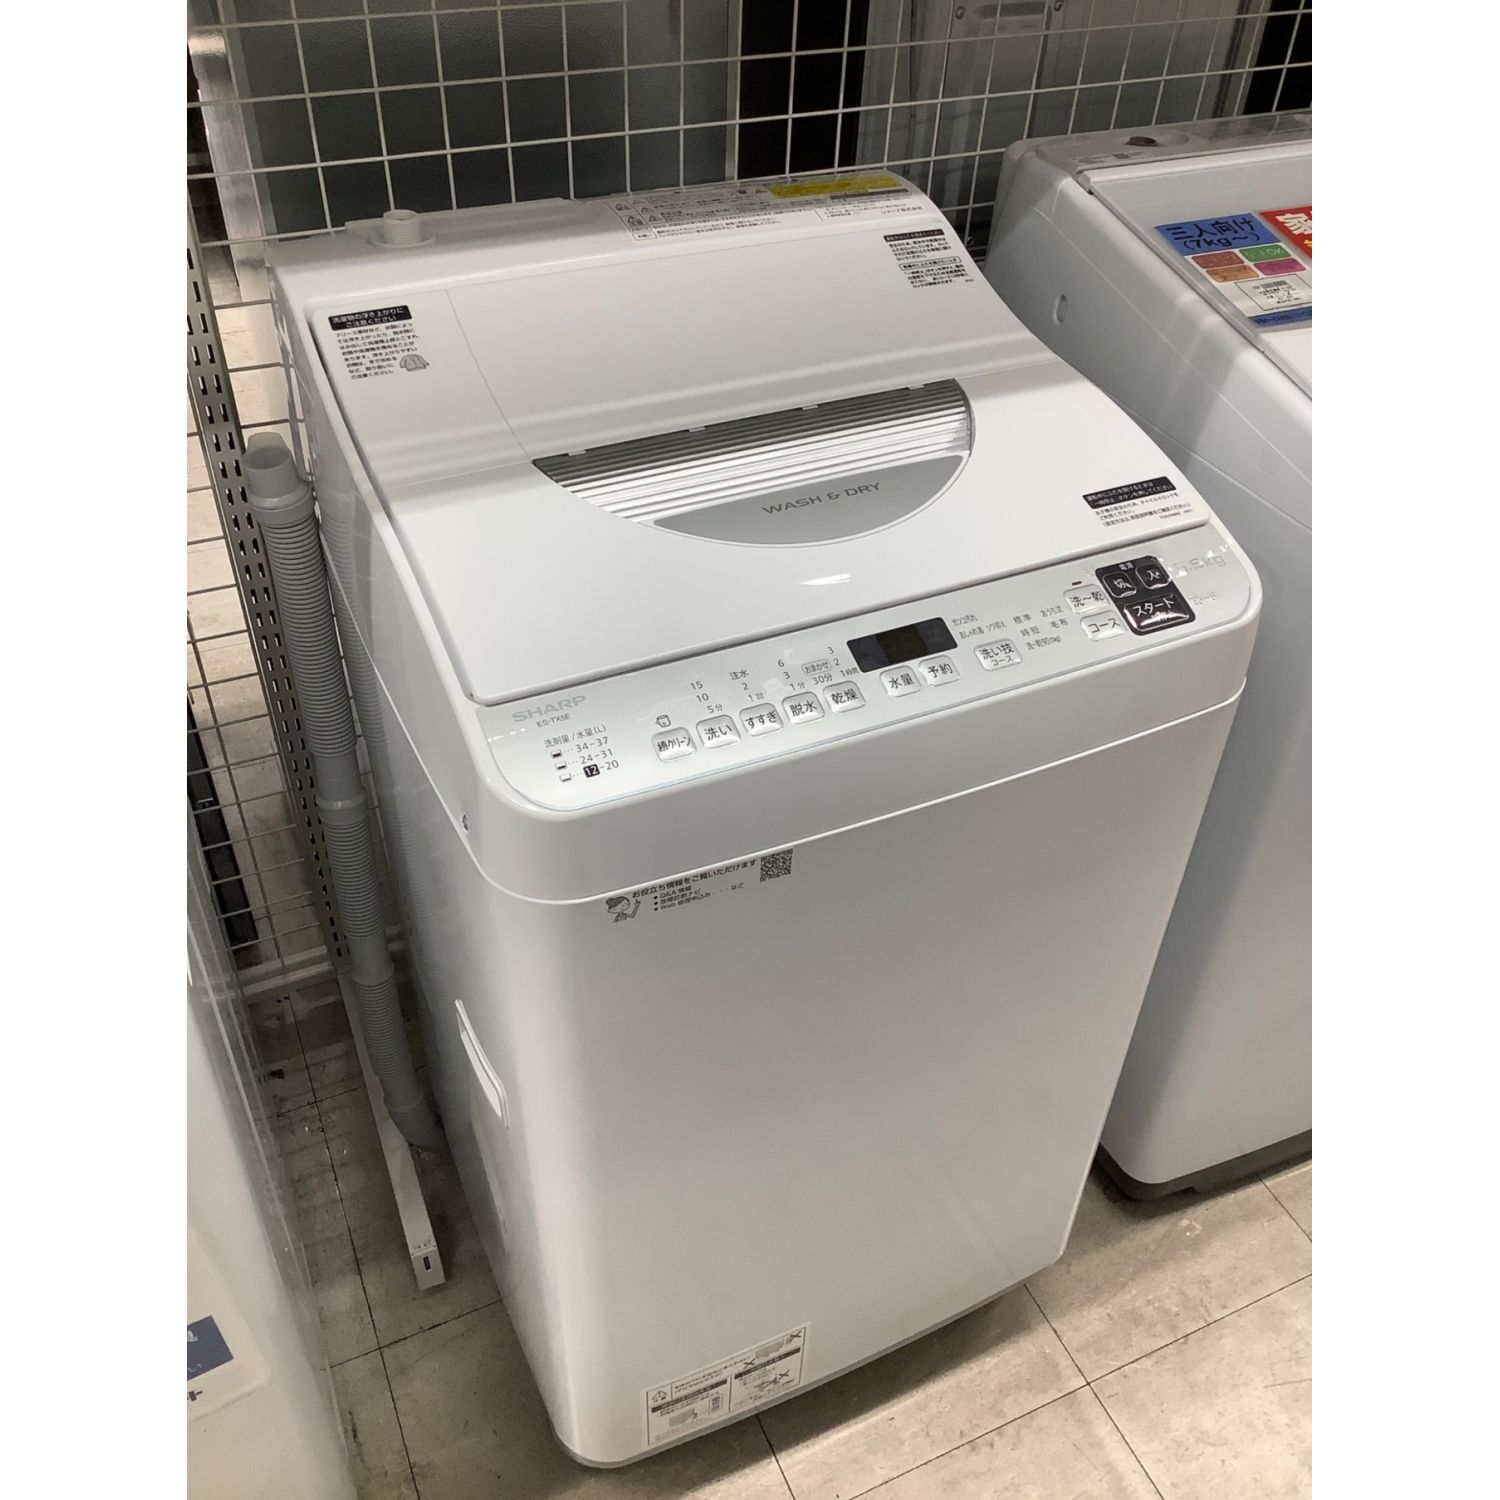 SHARP 全自動洗濯機 5.5kg 2018年製 - 生活家電